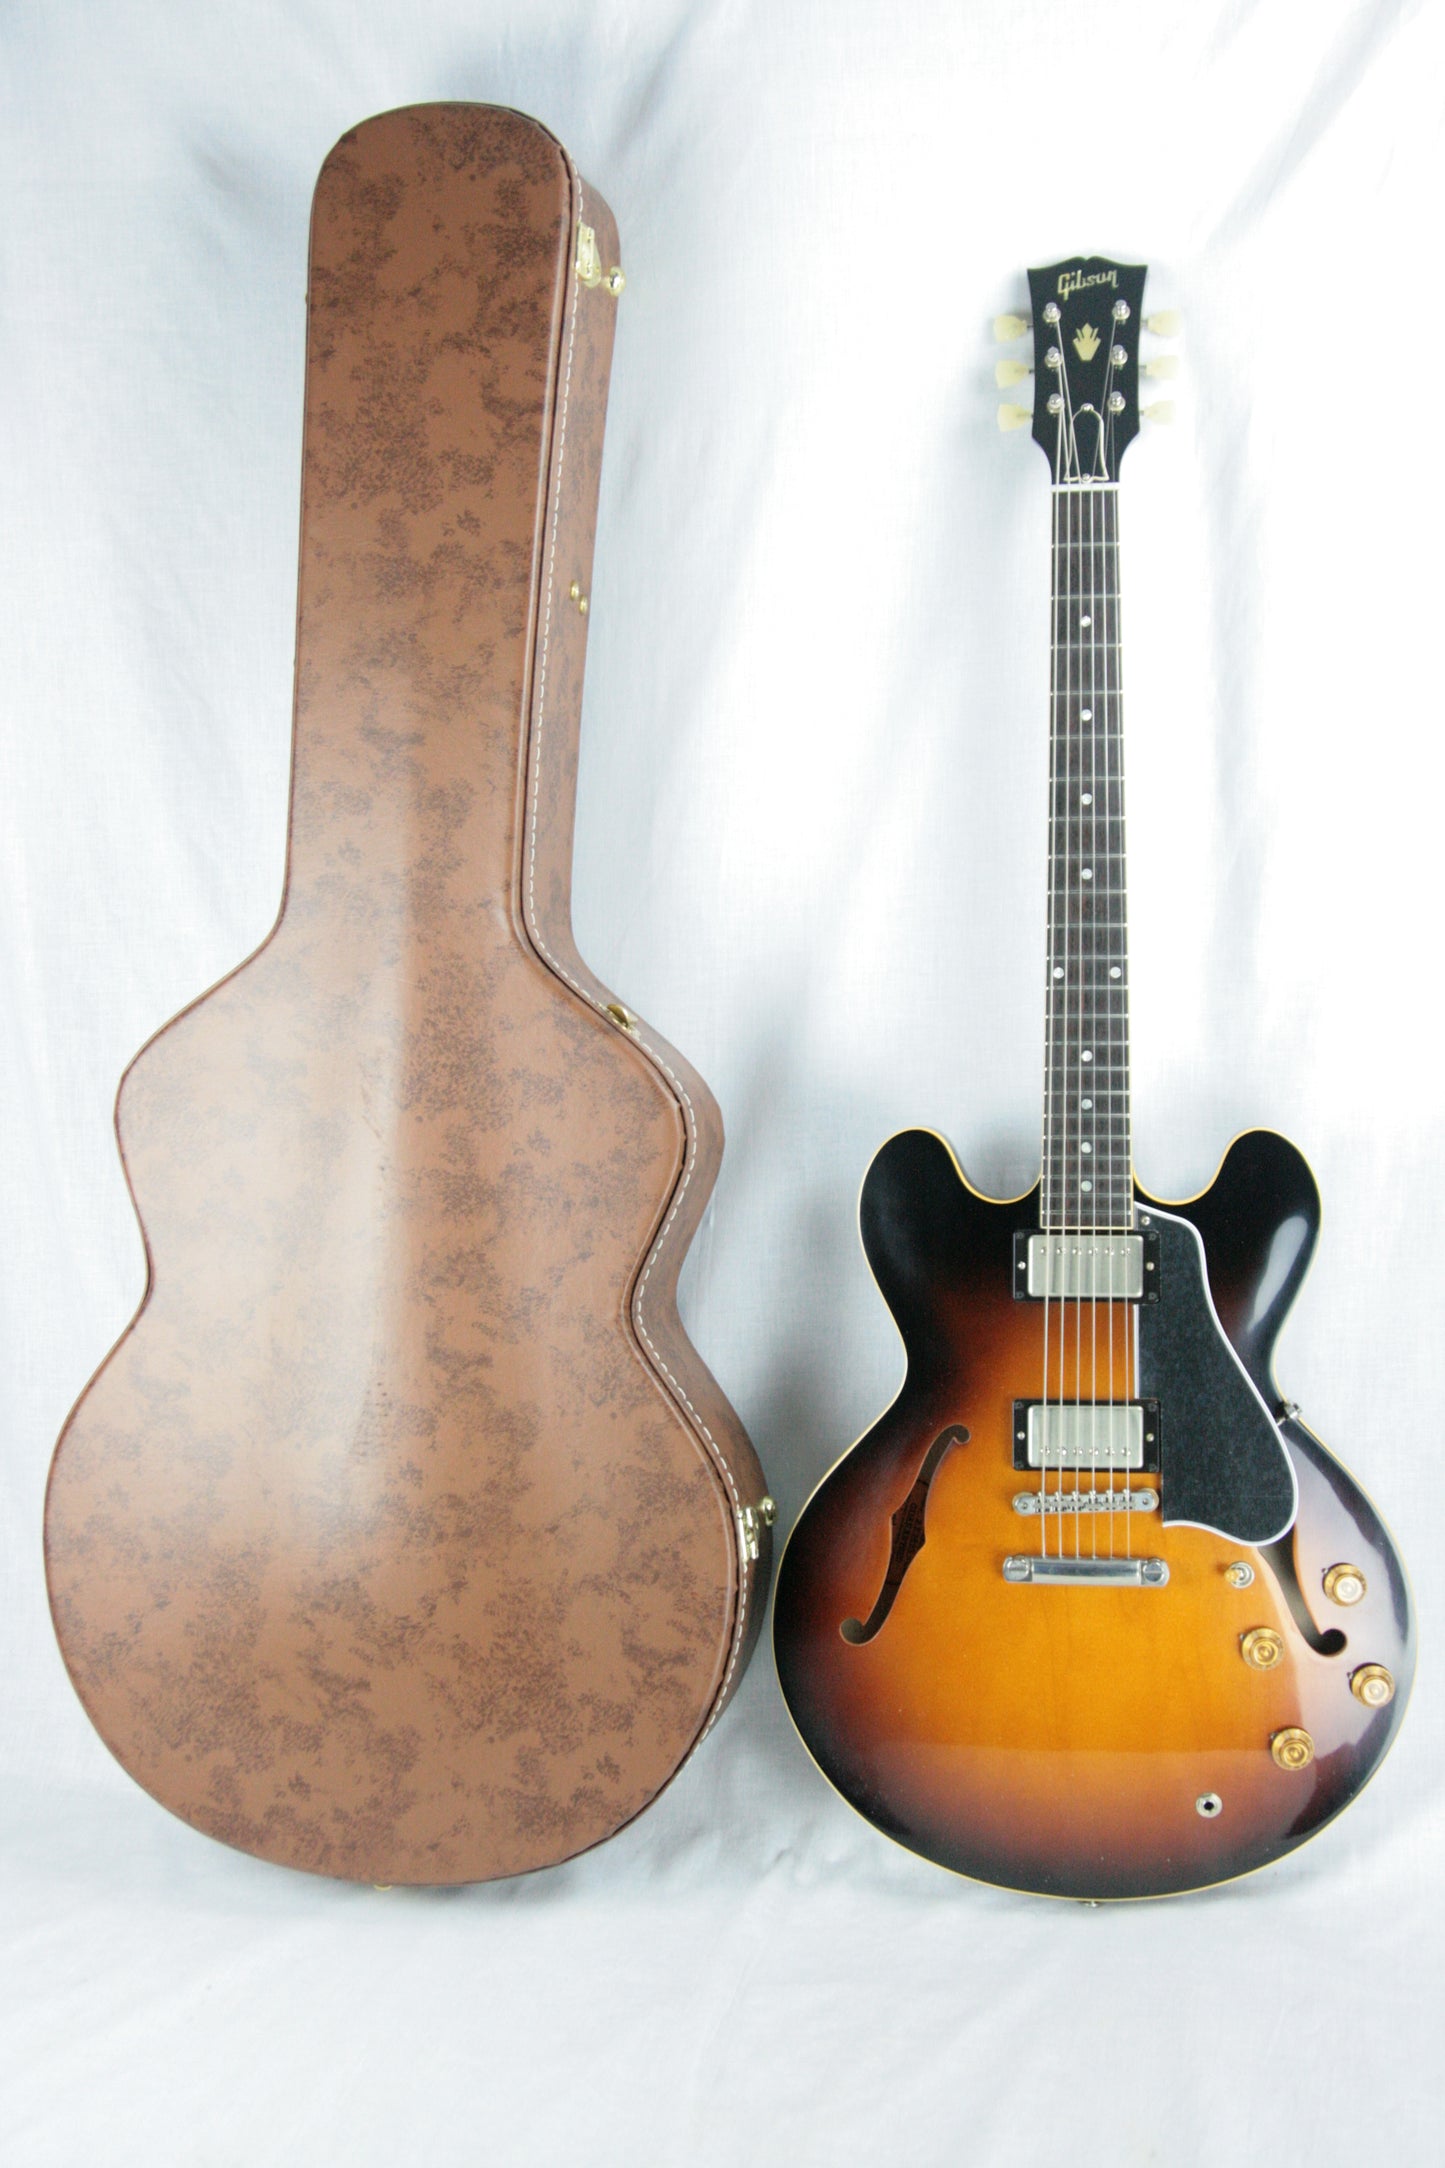 2017 Gibson Memphis '59 Reissue ES-335! 1959 VOS Sunburst! Dot Neck!